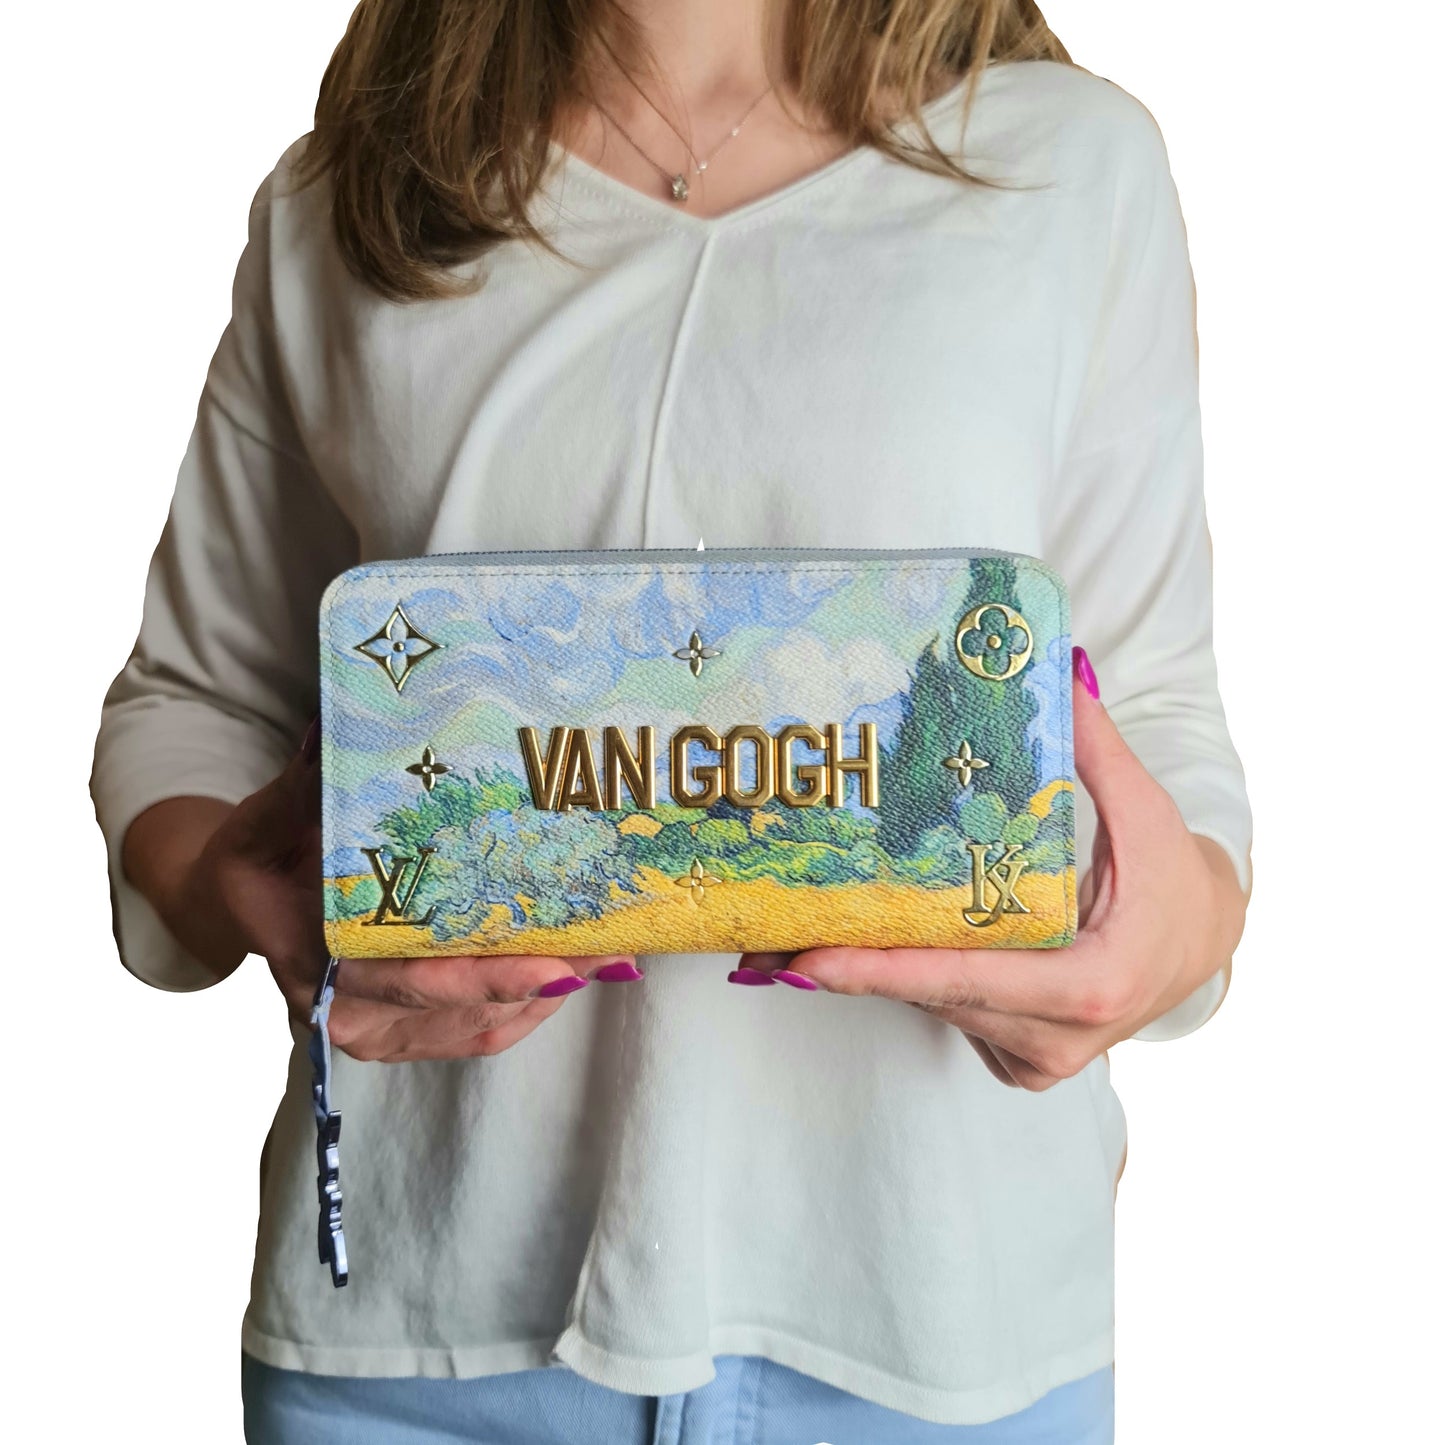 LOUIS VUITTON Masters Van Gogh Zippy Wallet 1233041